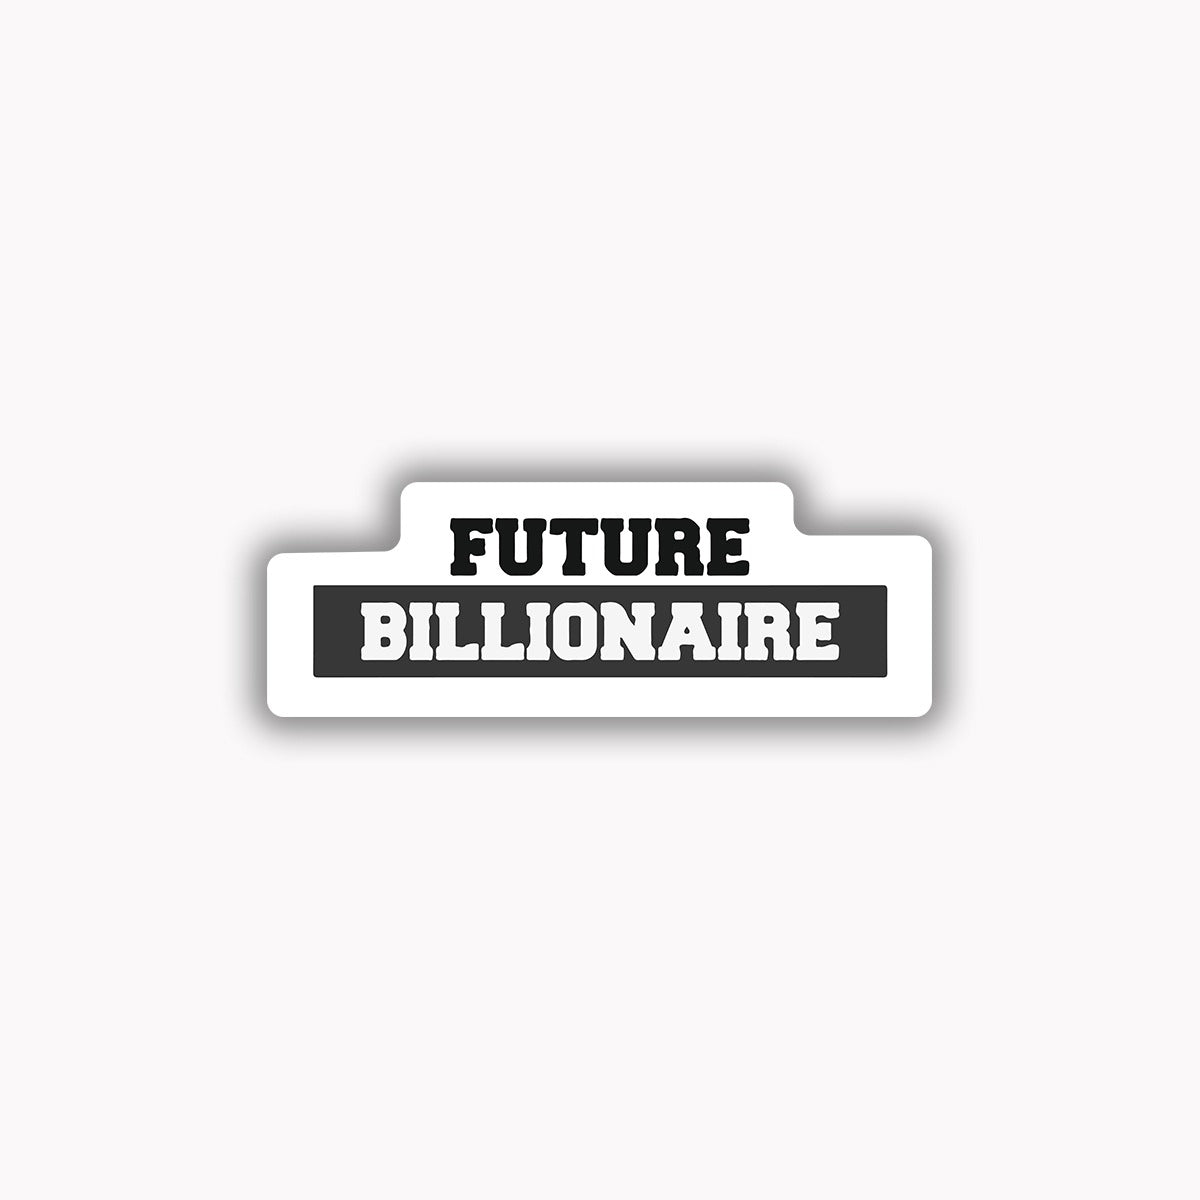 Future billionaire